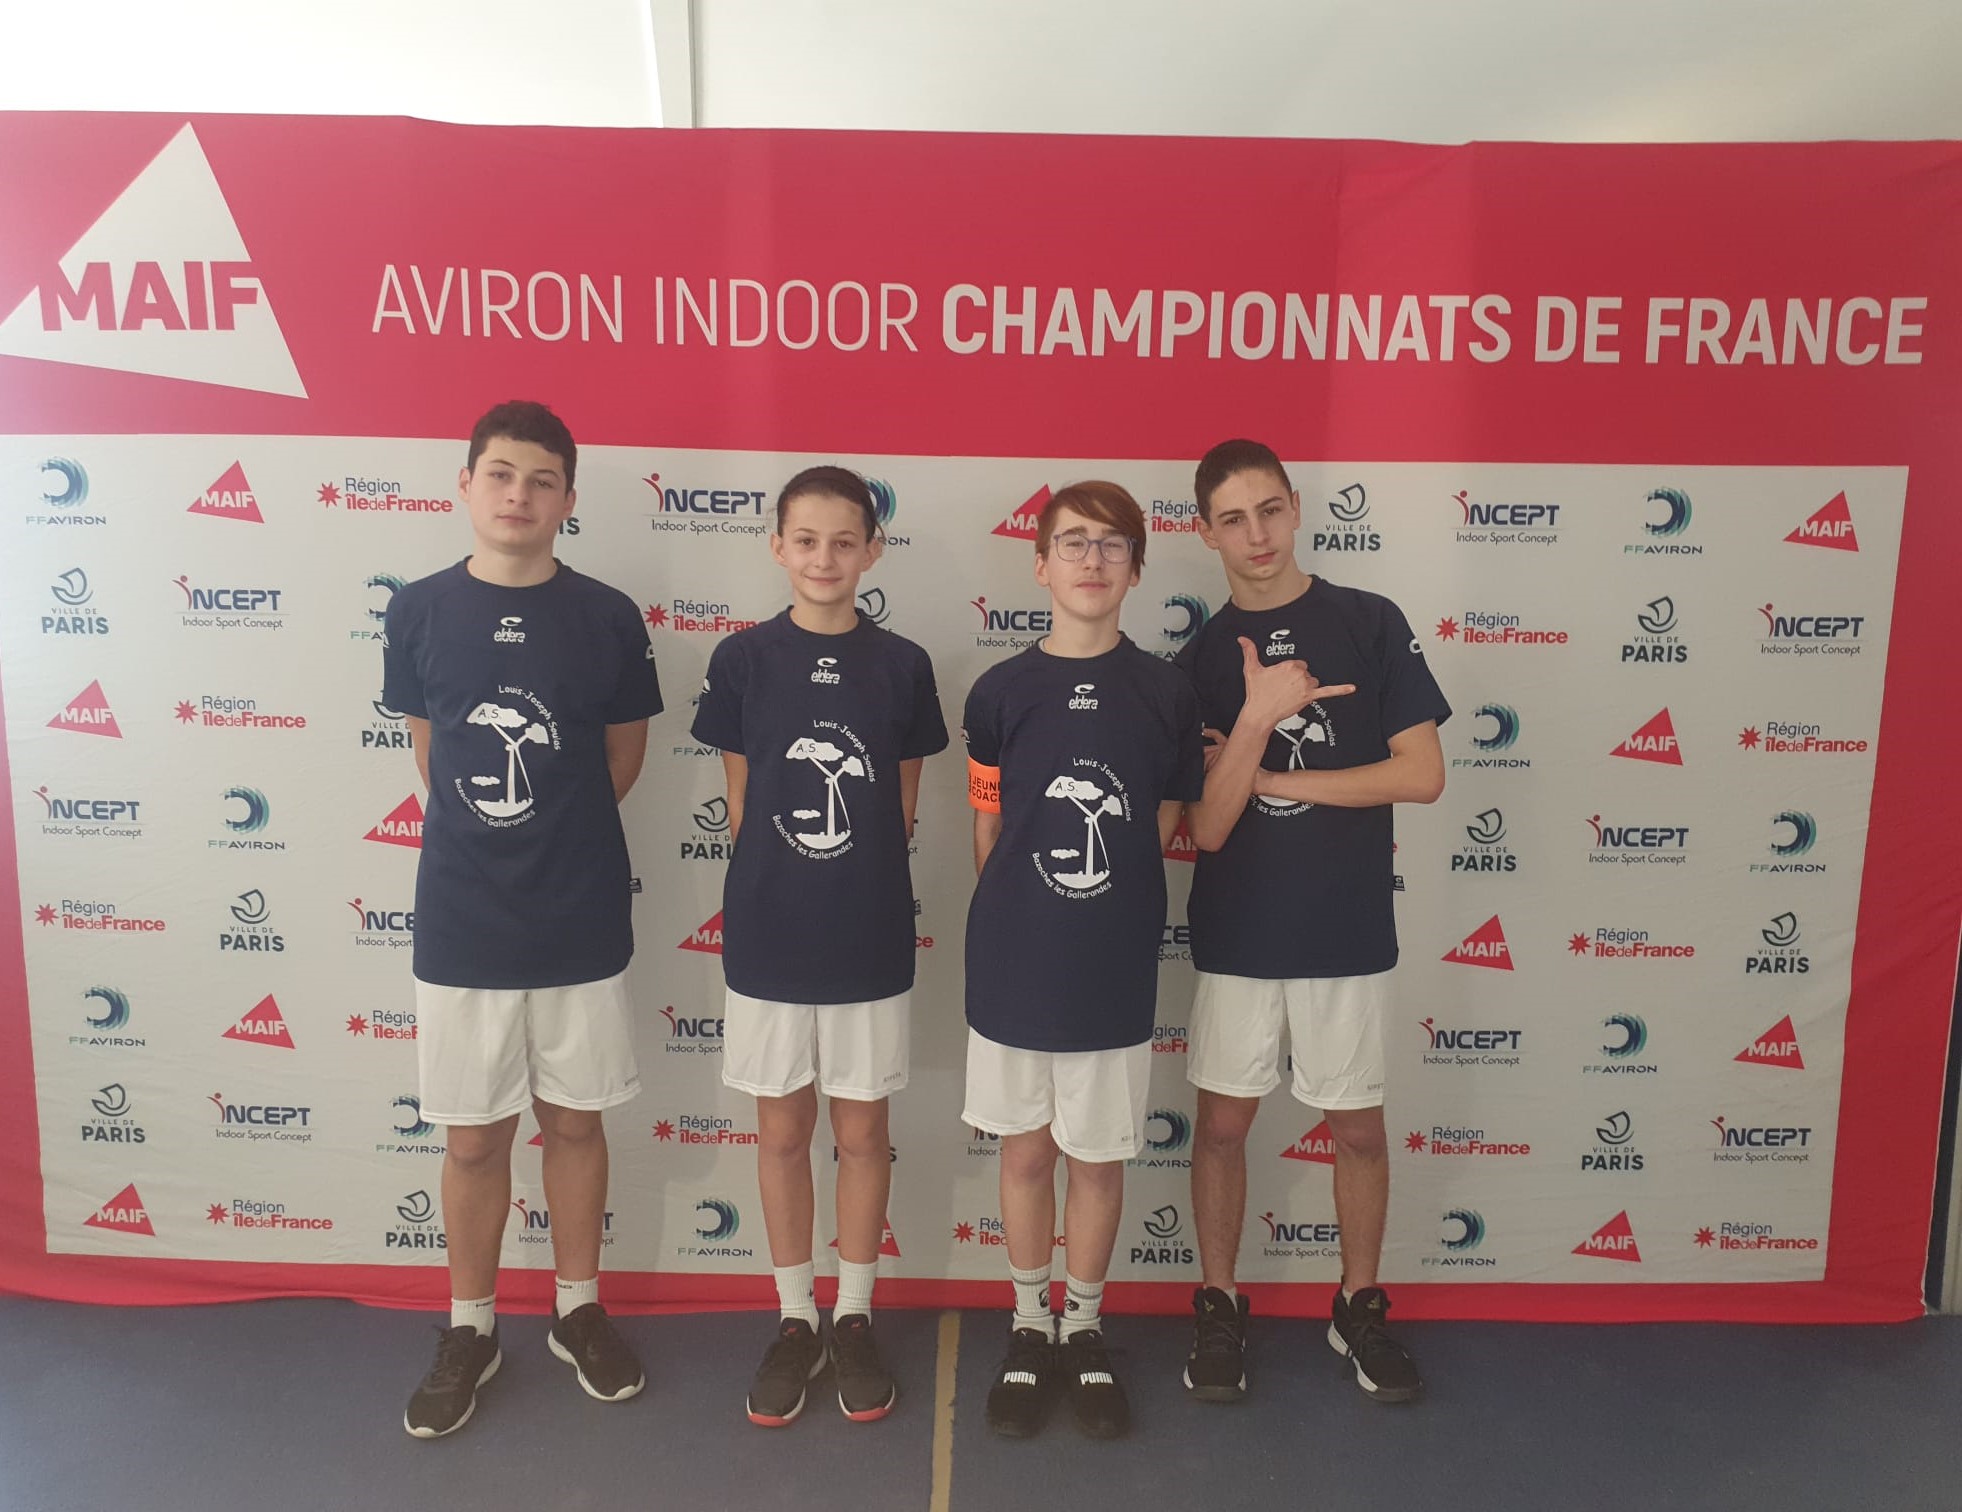 Championnats de France AVIRON Indoor